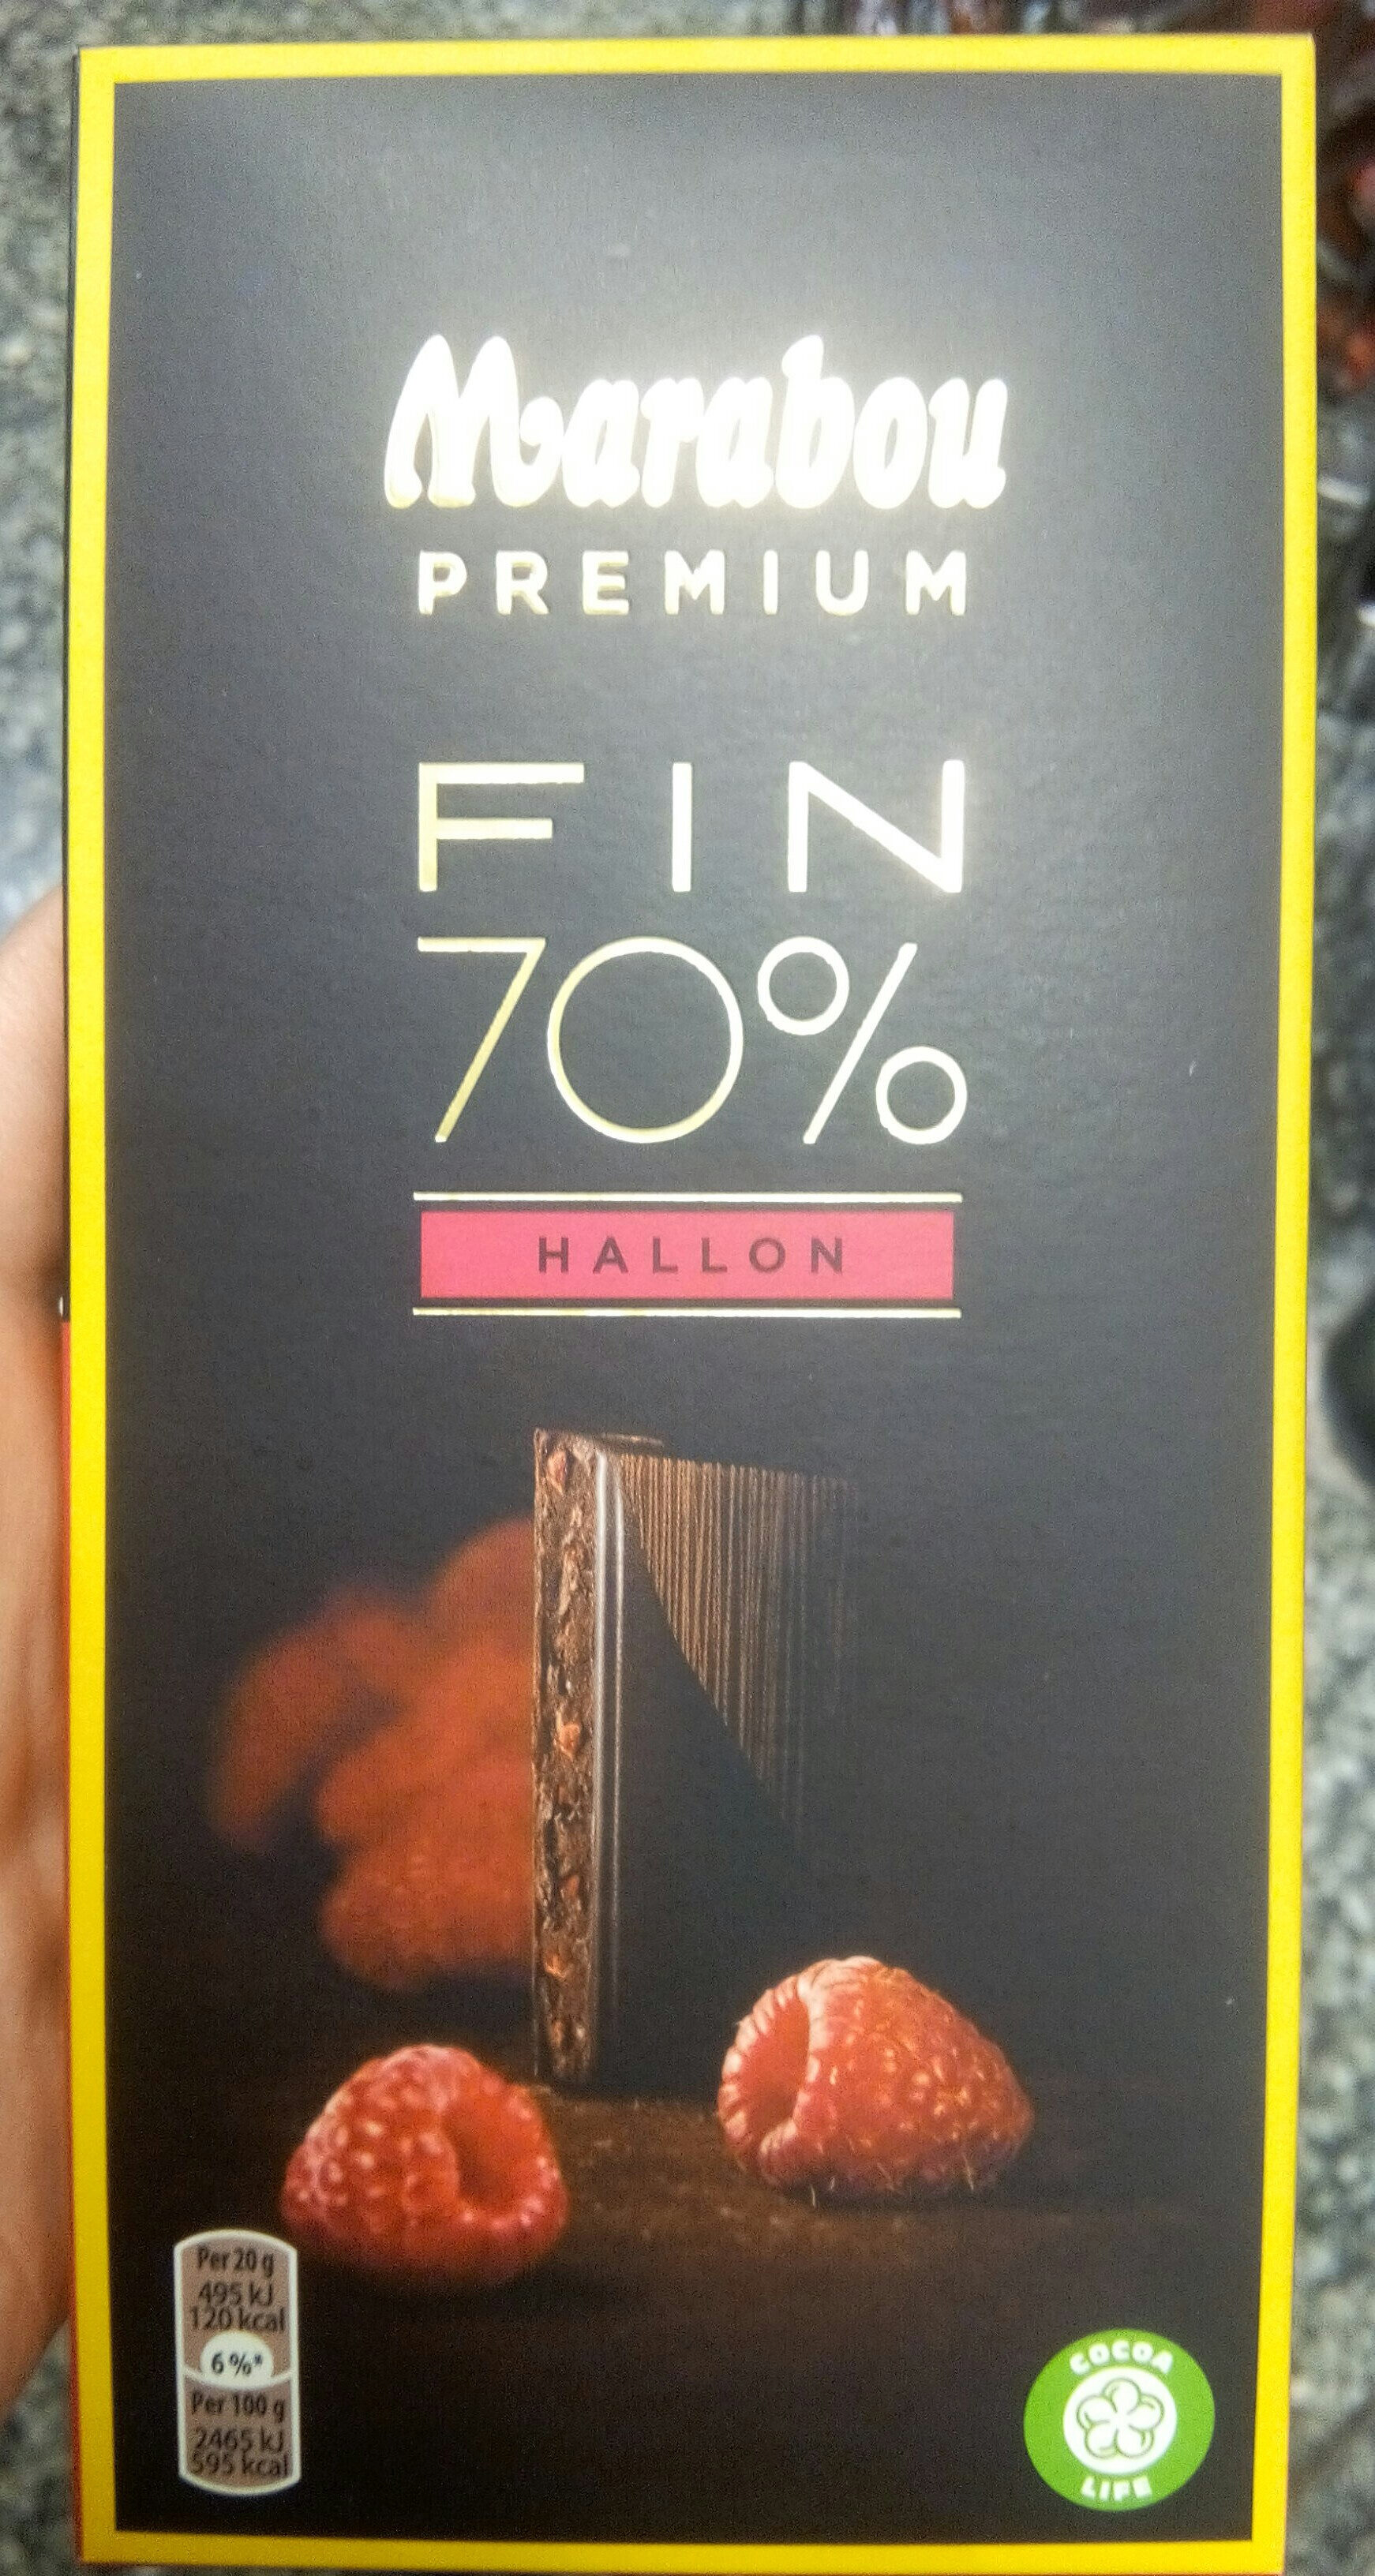 Fin 70% hallon - Product - sv